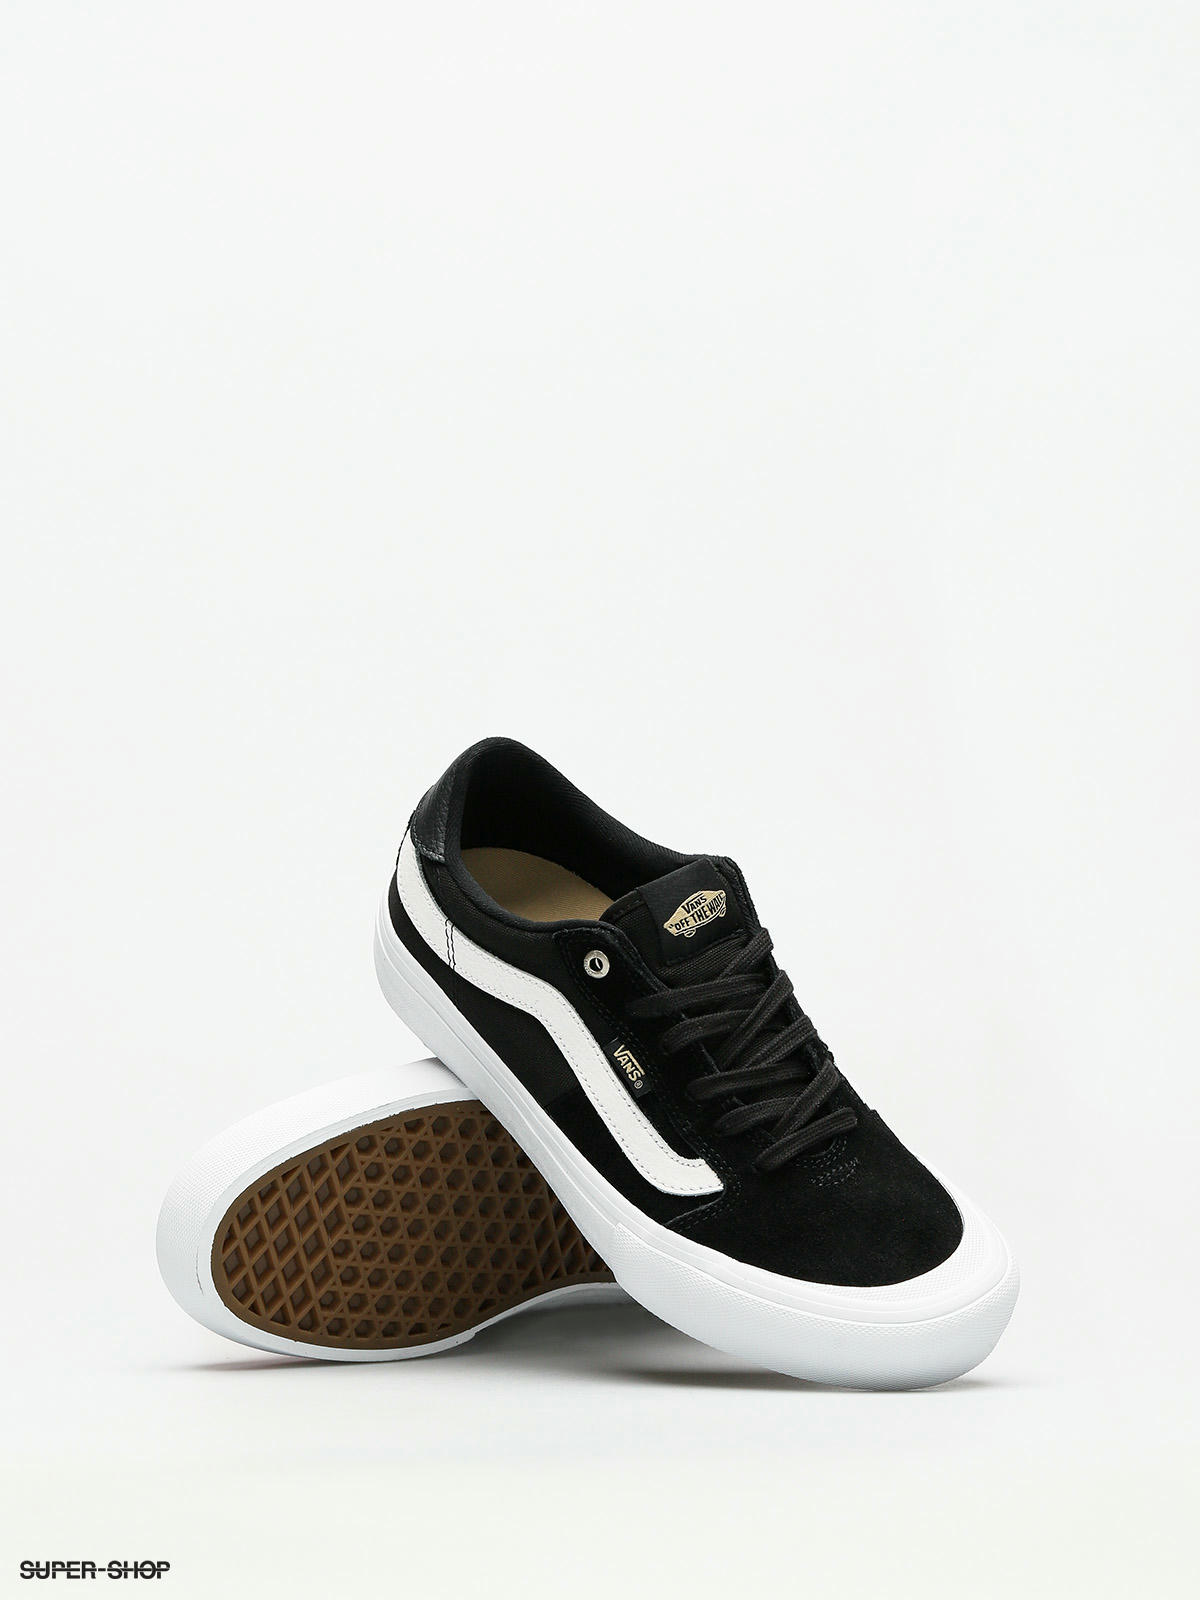 thema Huisje Persona Vans Shoes Style 112 Pro (black/white/khaki)